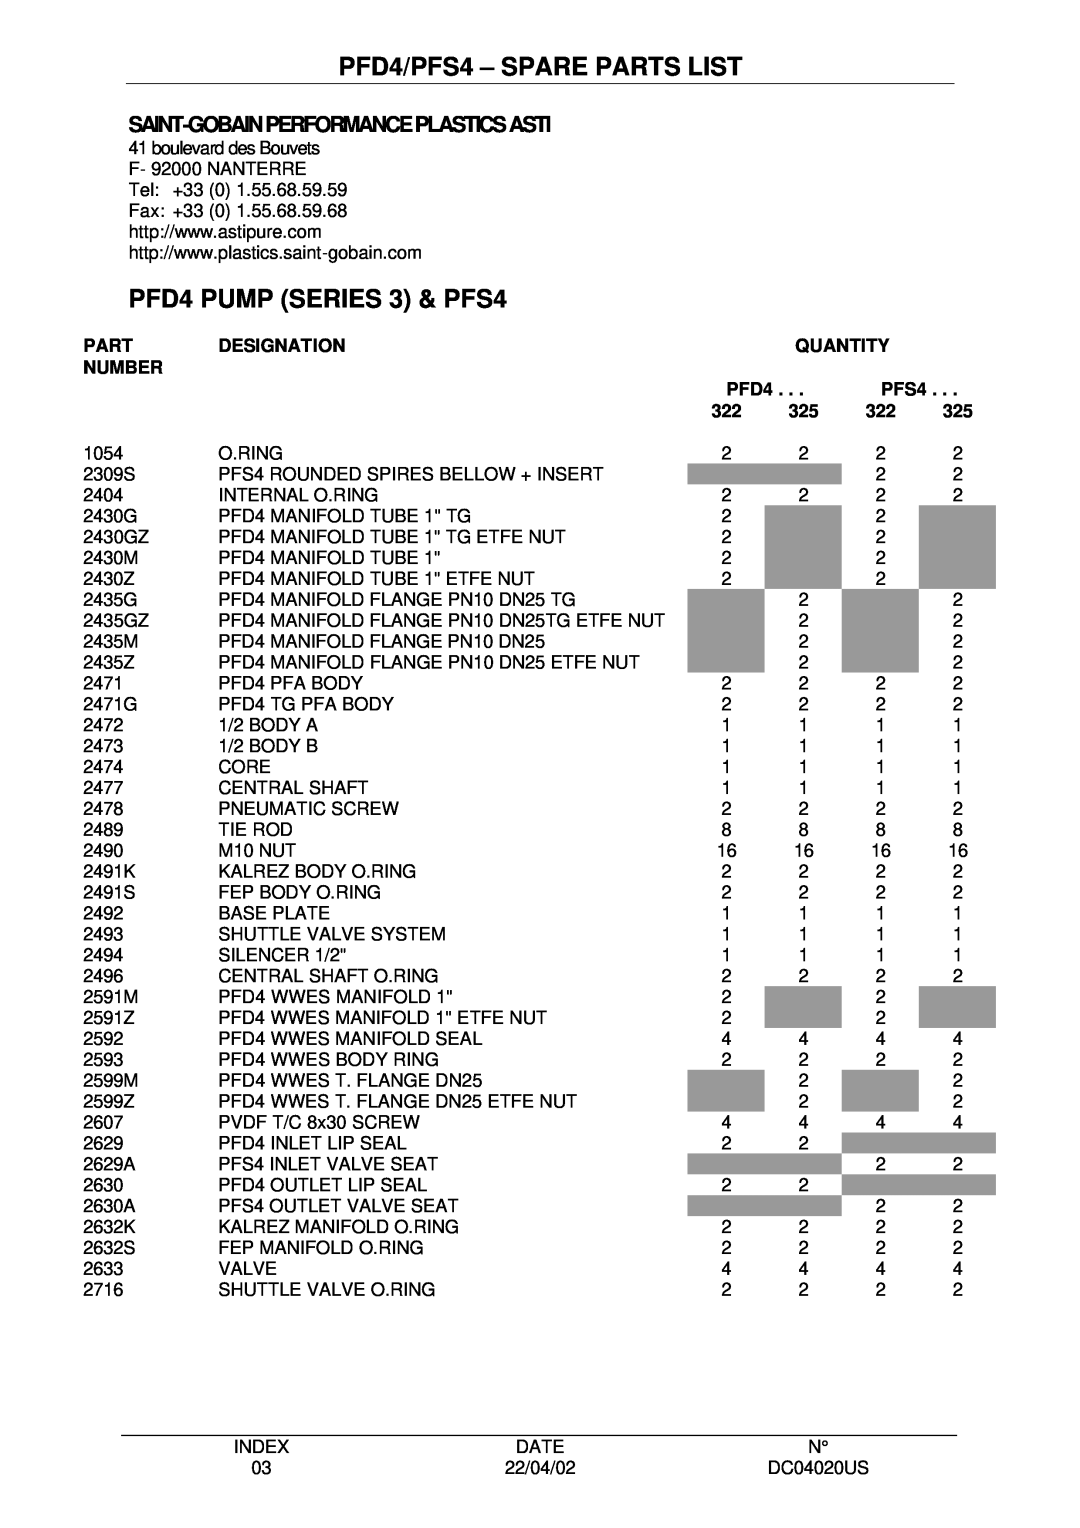 Saint Gobain Vidros manual PFD4/PFS4 - SPARE PARTS LIST, PFD4 PUMP SERIES 3 & PFS4, Part, Designation, Quantity, Number 